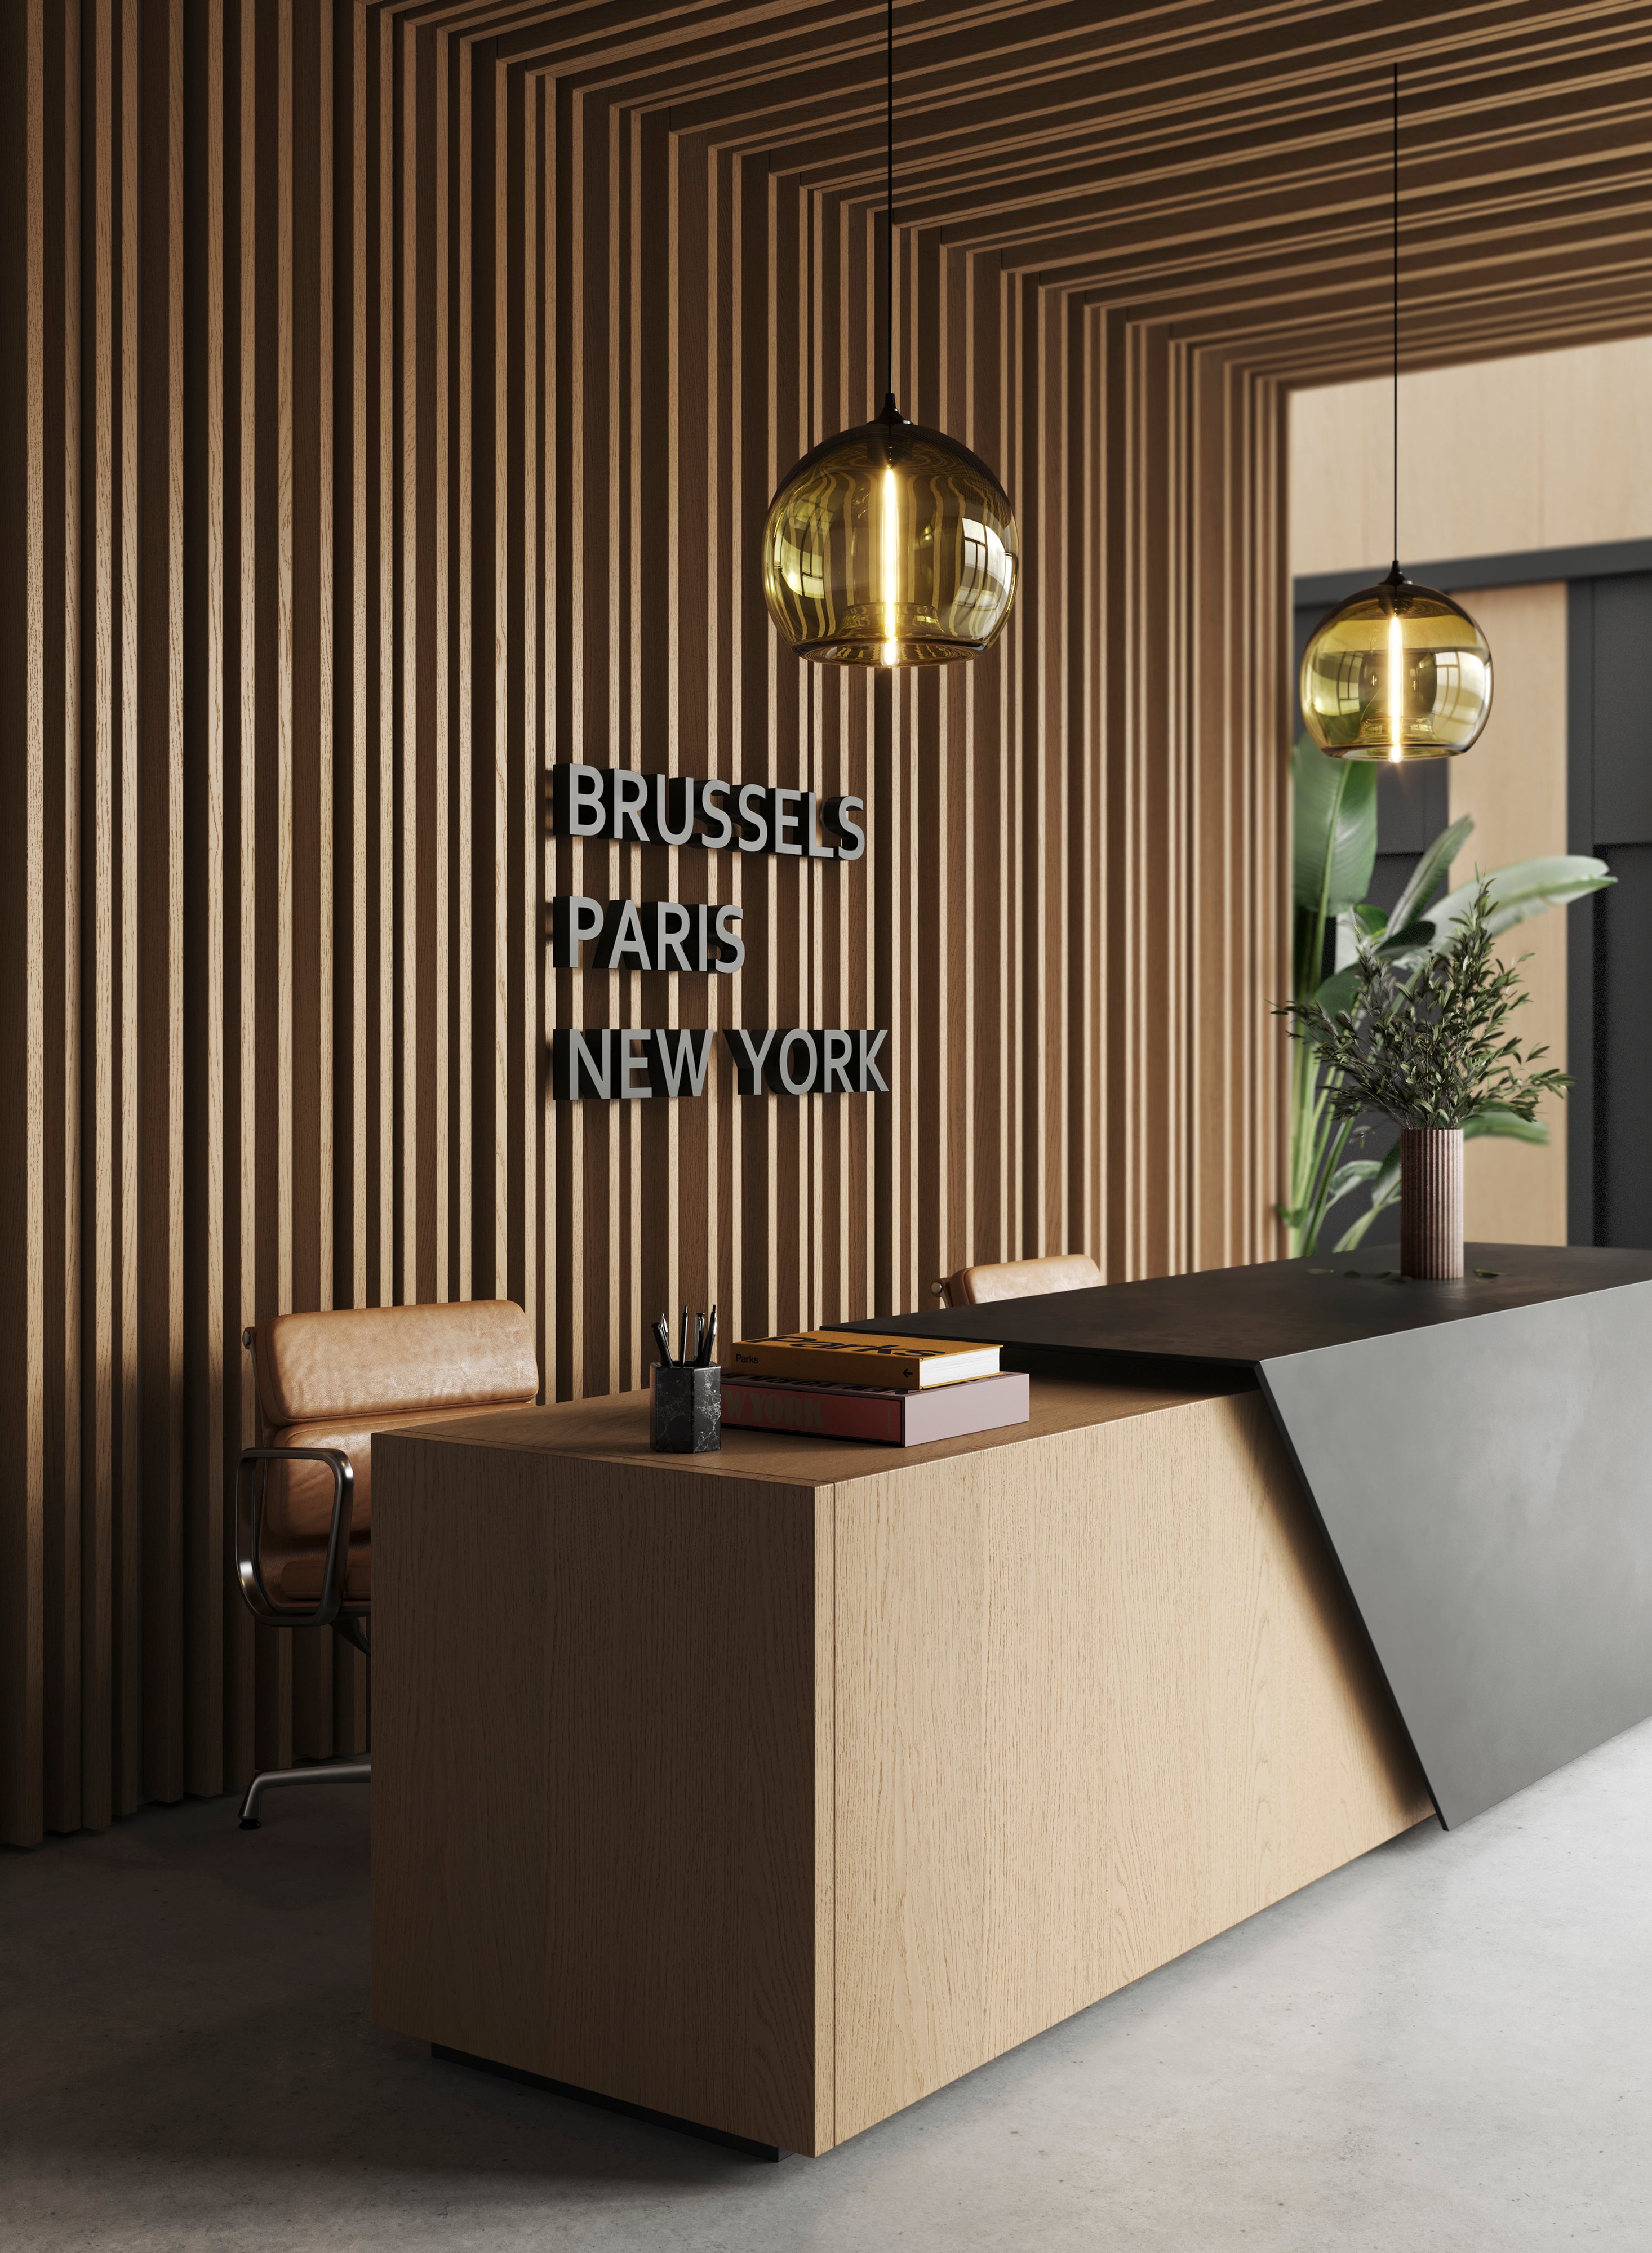 Astrata Slats: Wood Touch for Versatile Interior Design